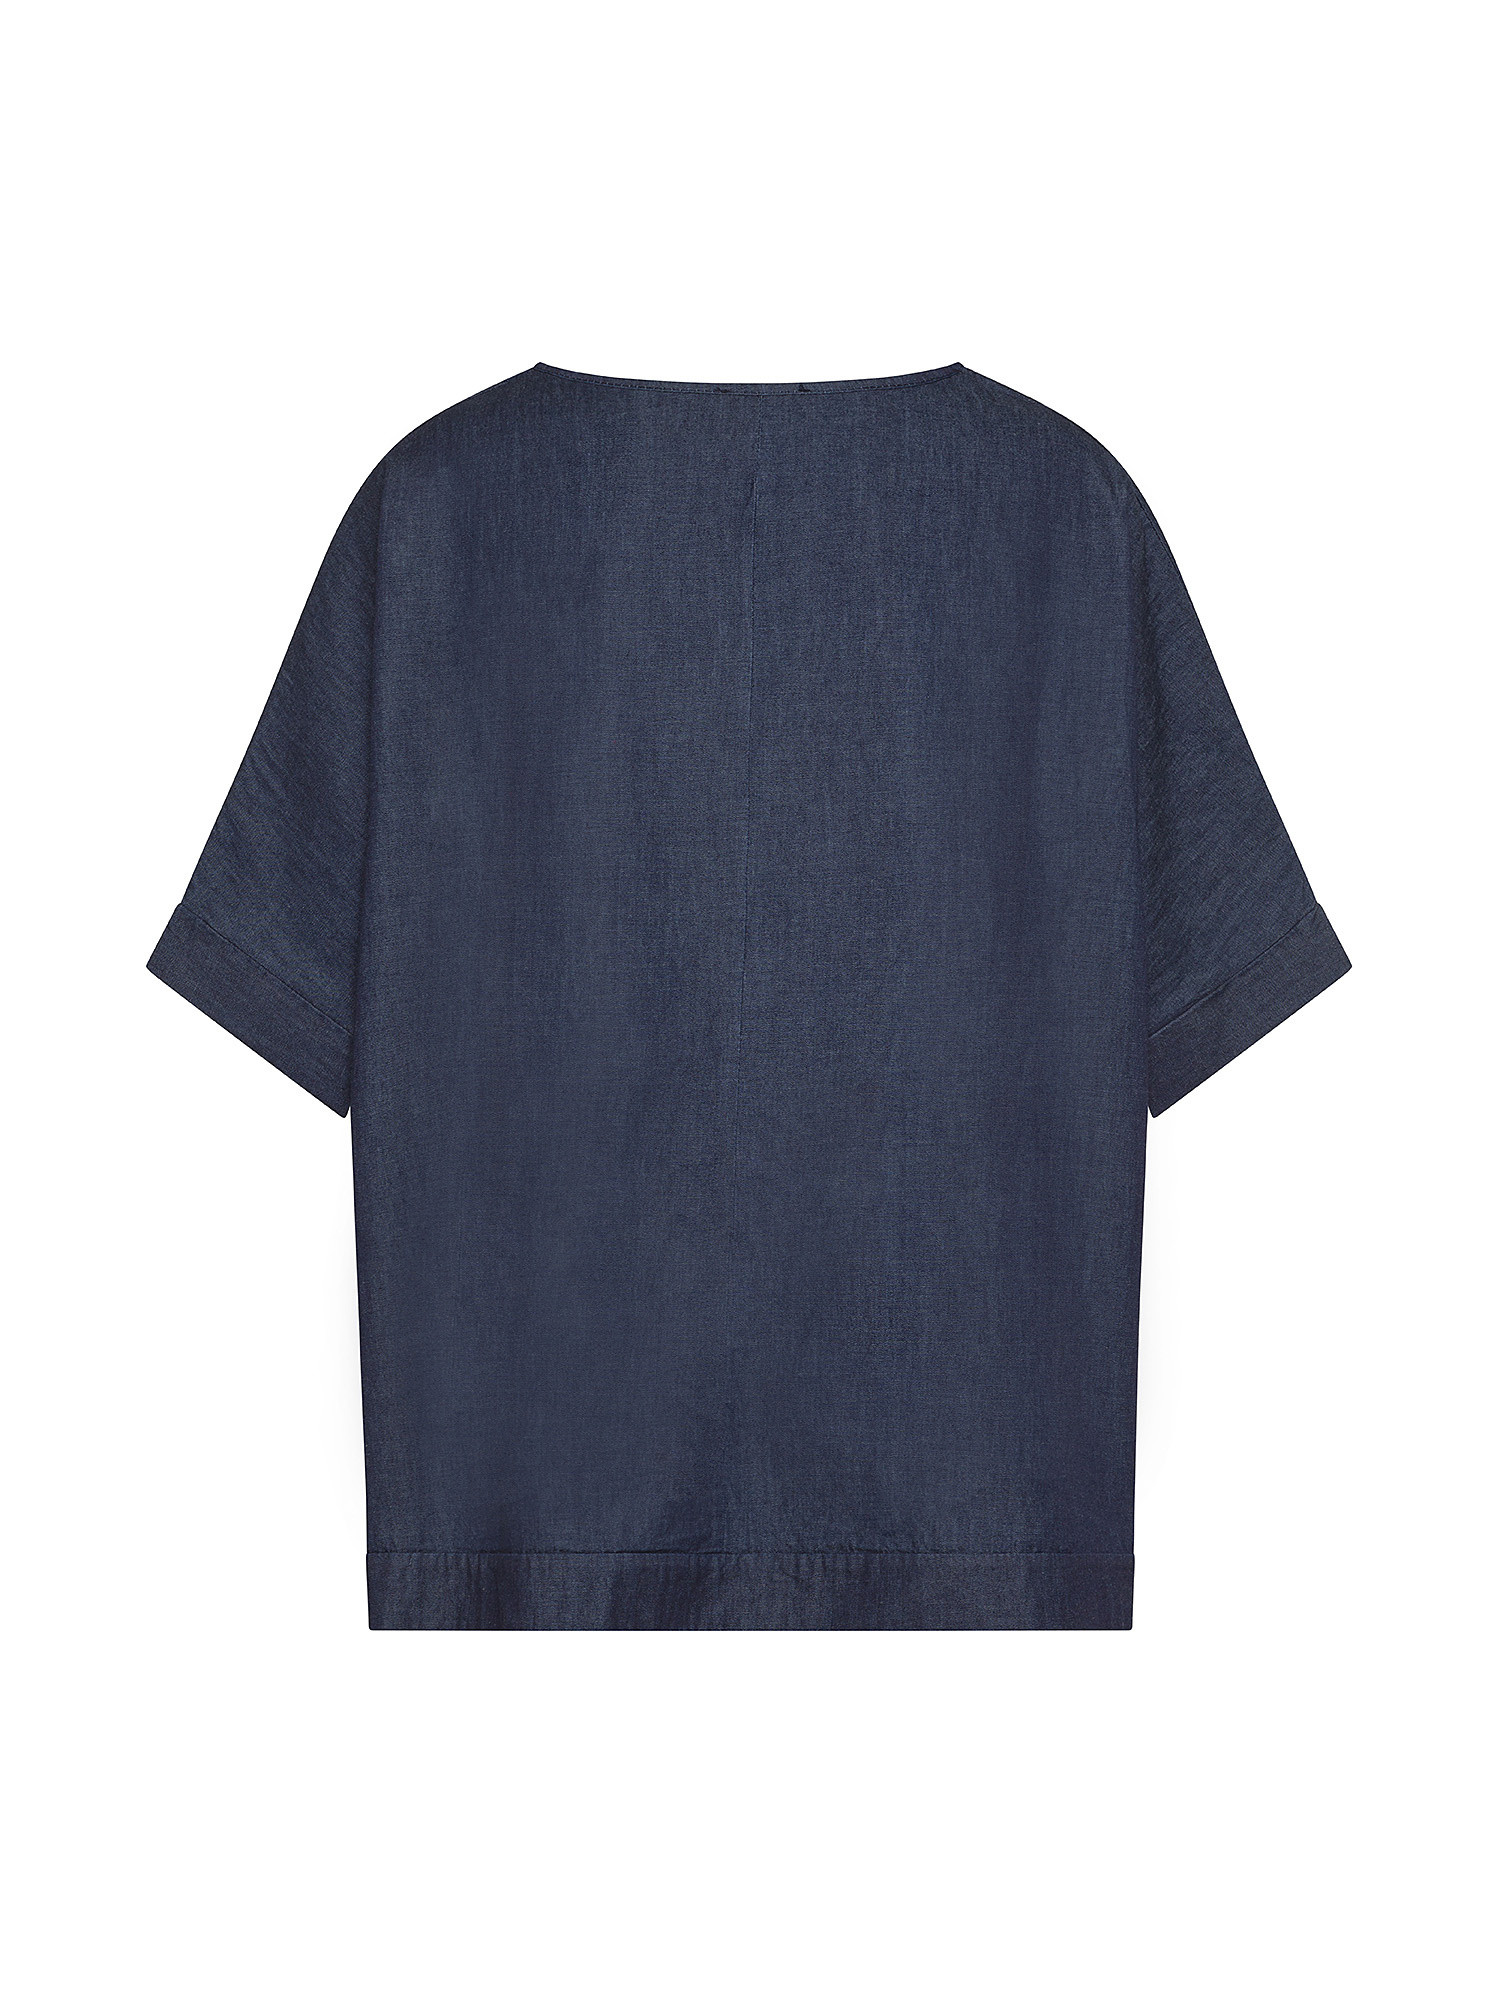 Blusa over chambray di cotone tinta unita, Azzurro, large image number 1